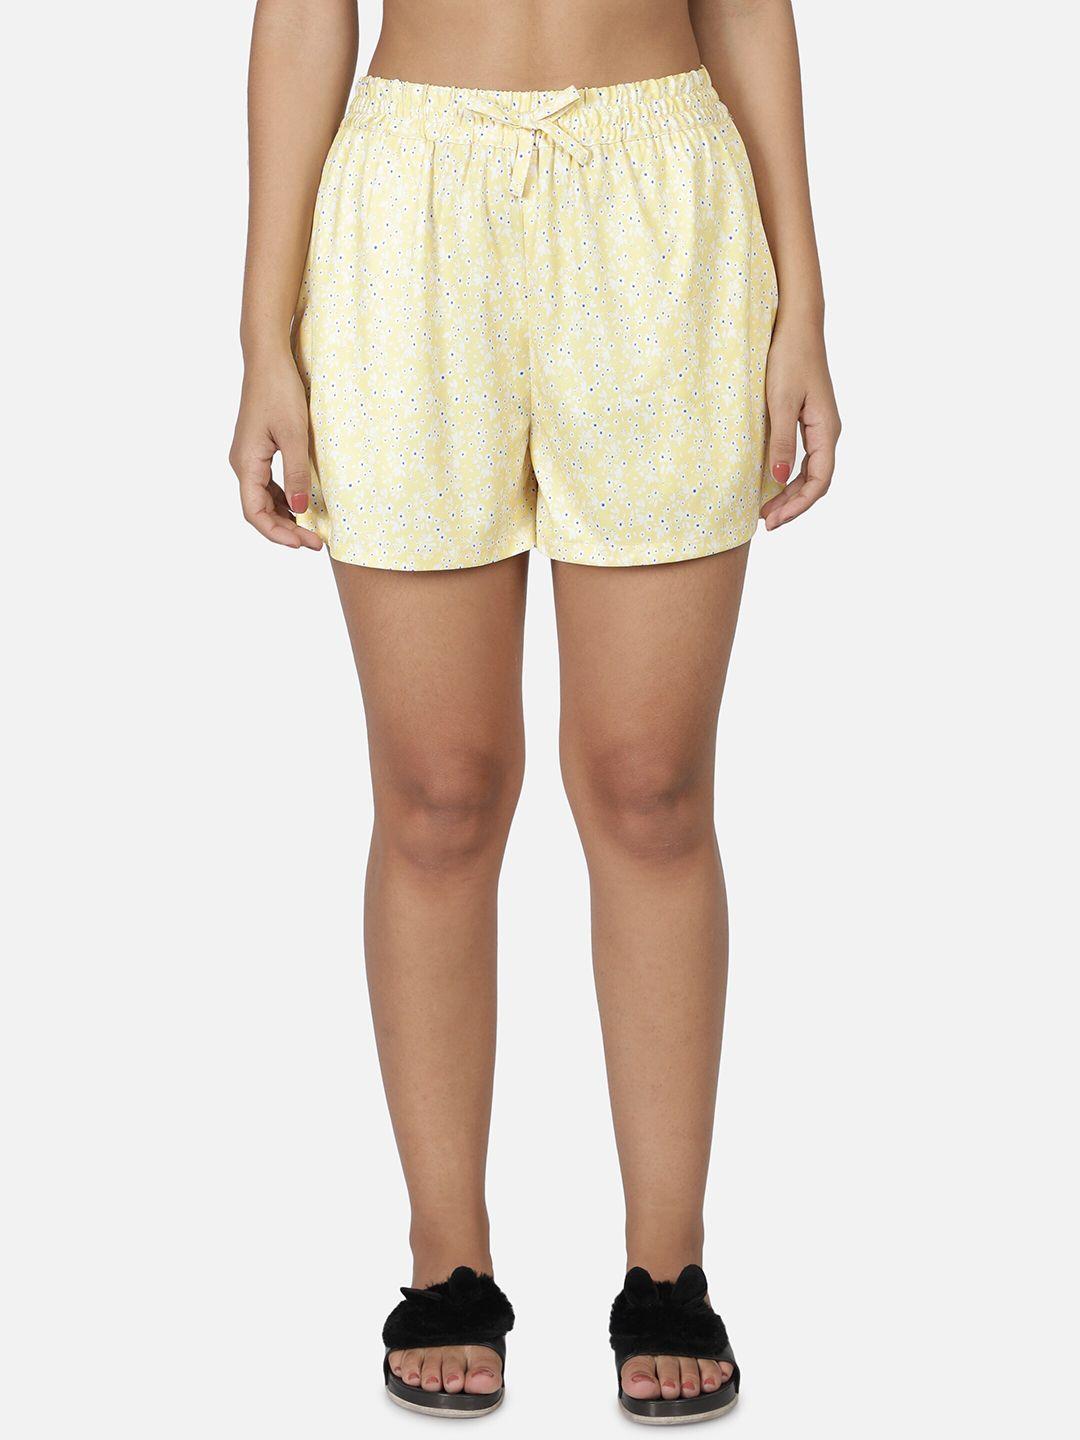 nuevosdamas women floral print mid-rise regular shorts